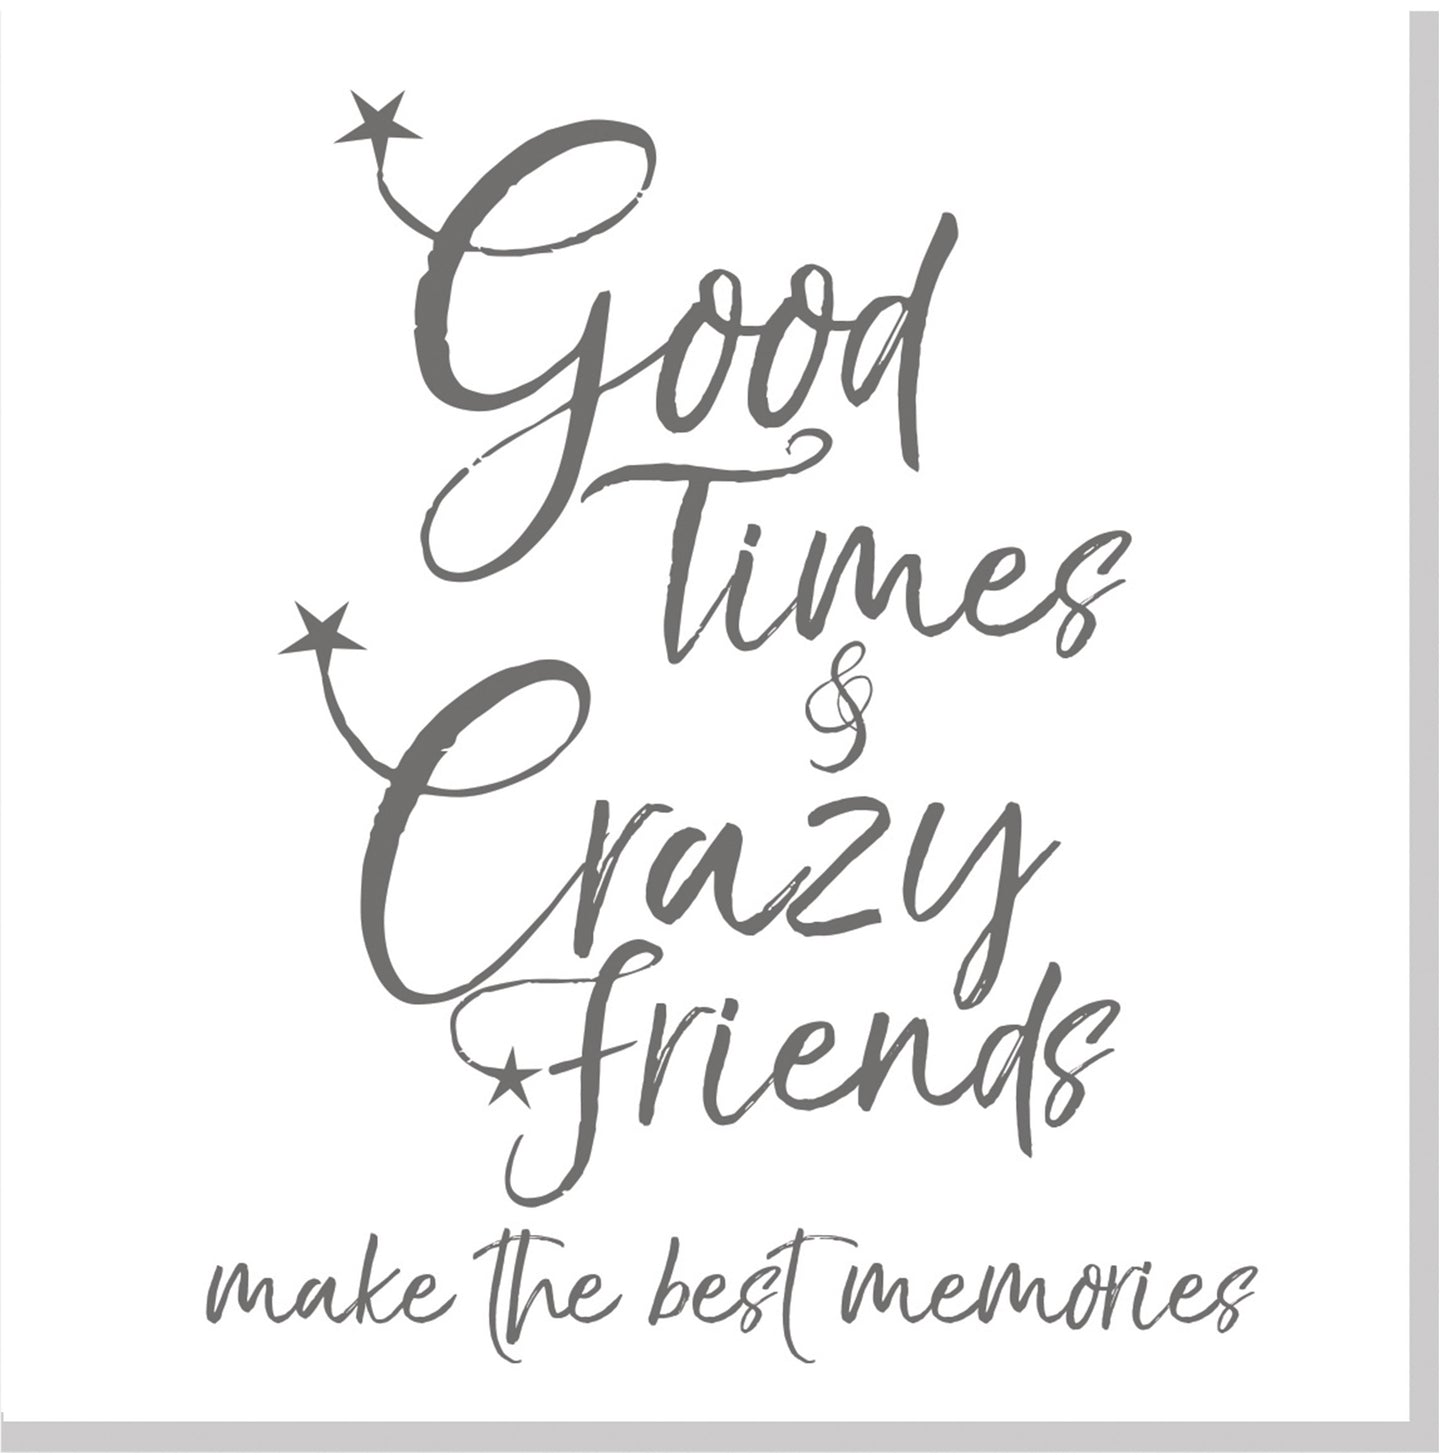 Crazy friends best memories square card